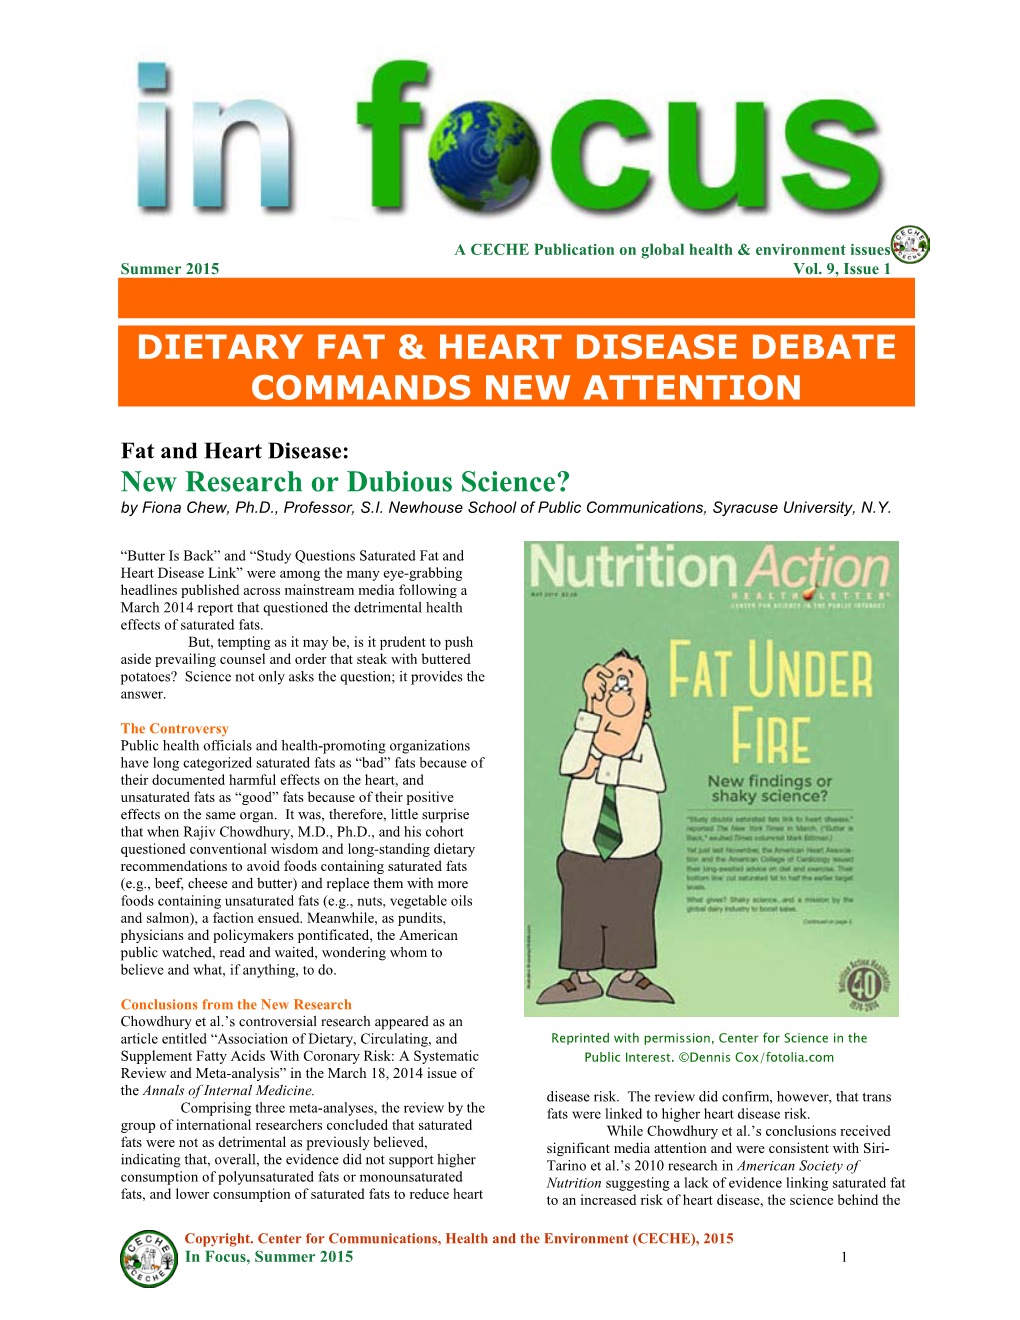 Dietary Fat & Heart Disease Debate Commands New